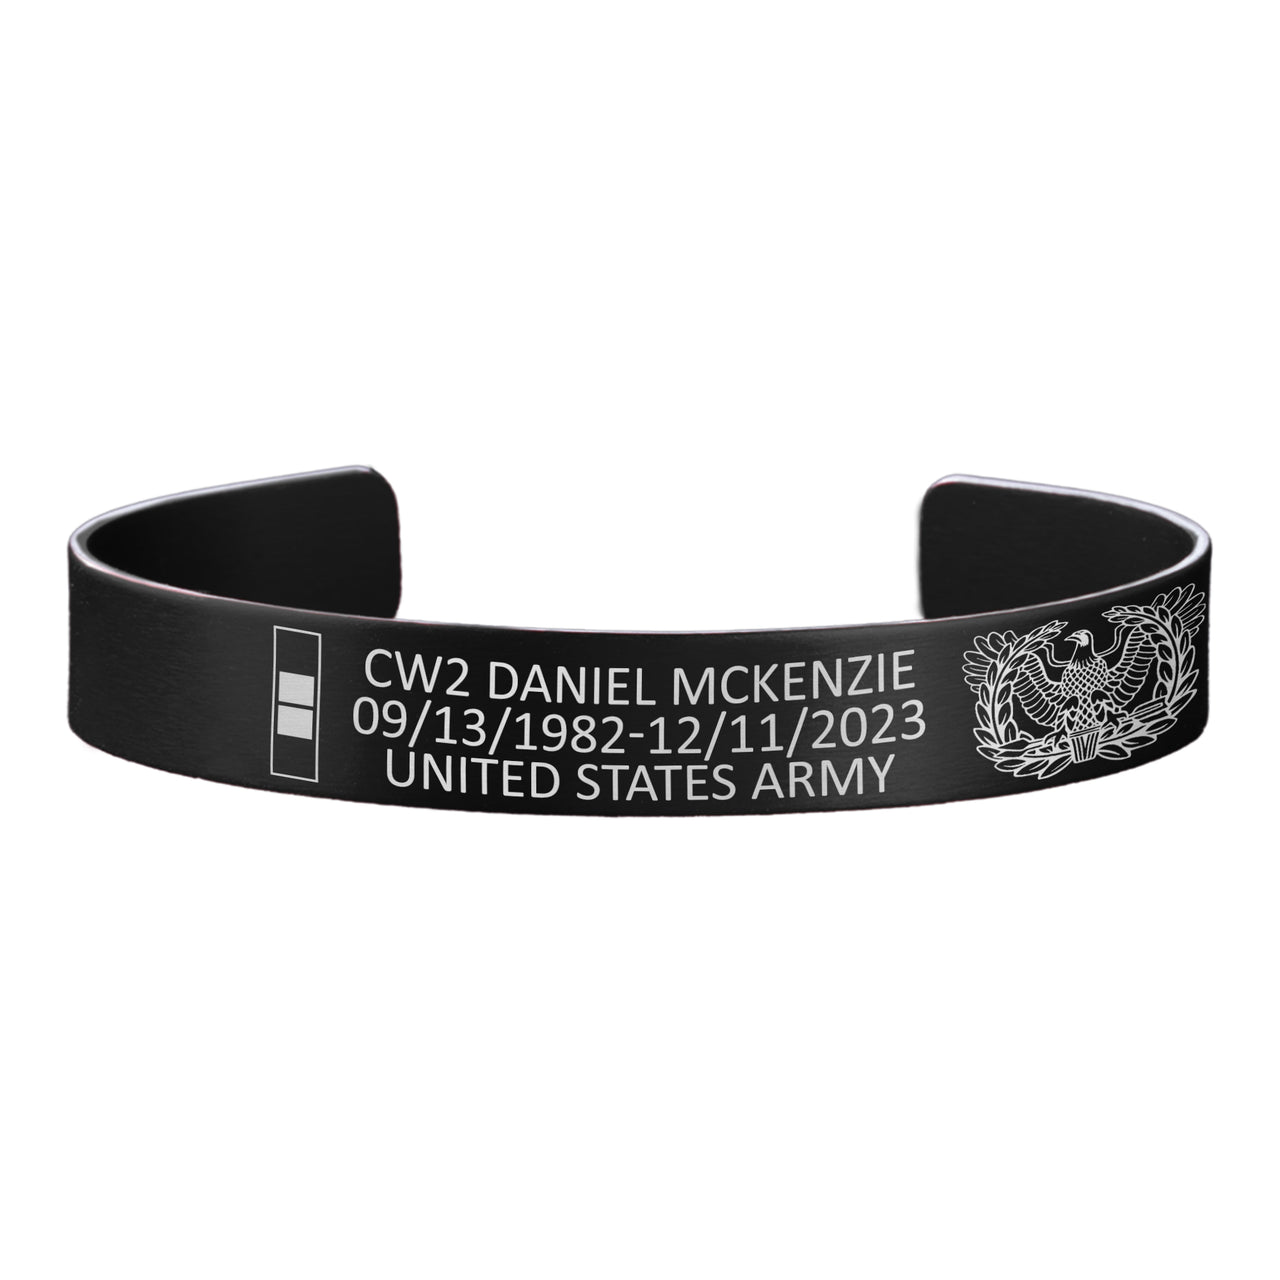 CW2 Daniel McKenzie Memorial Band – Hosted by the McKenzie Family